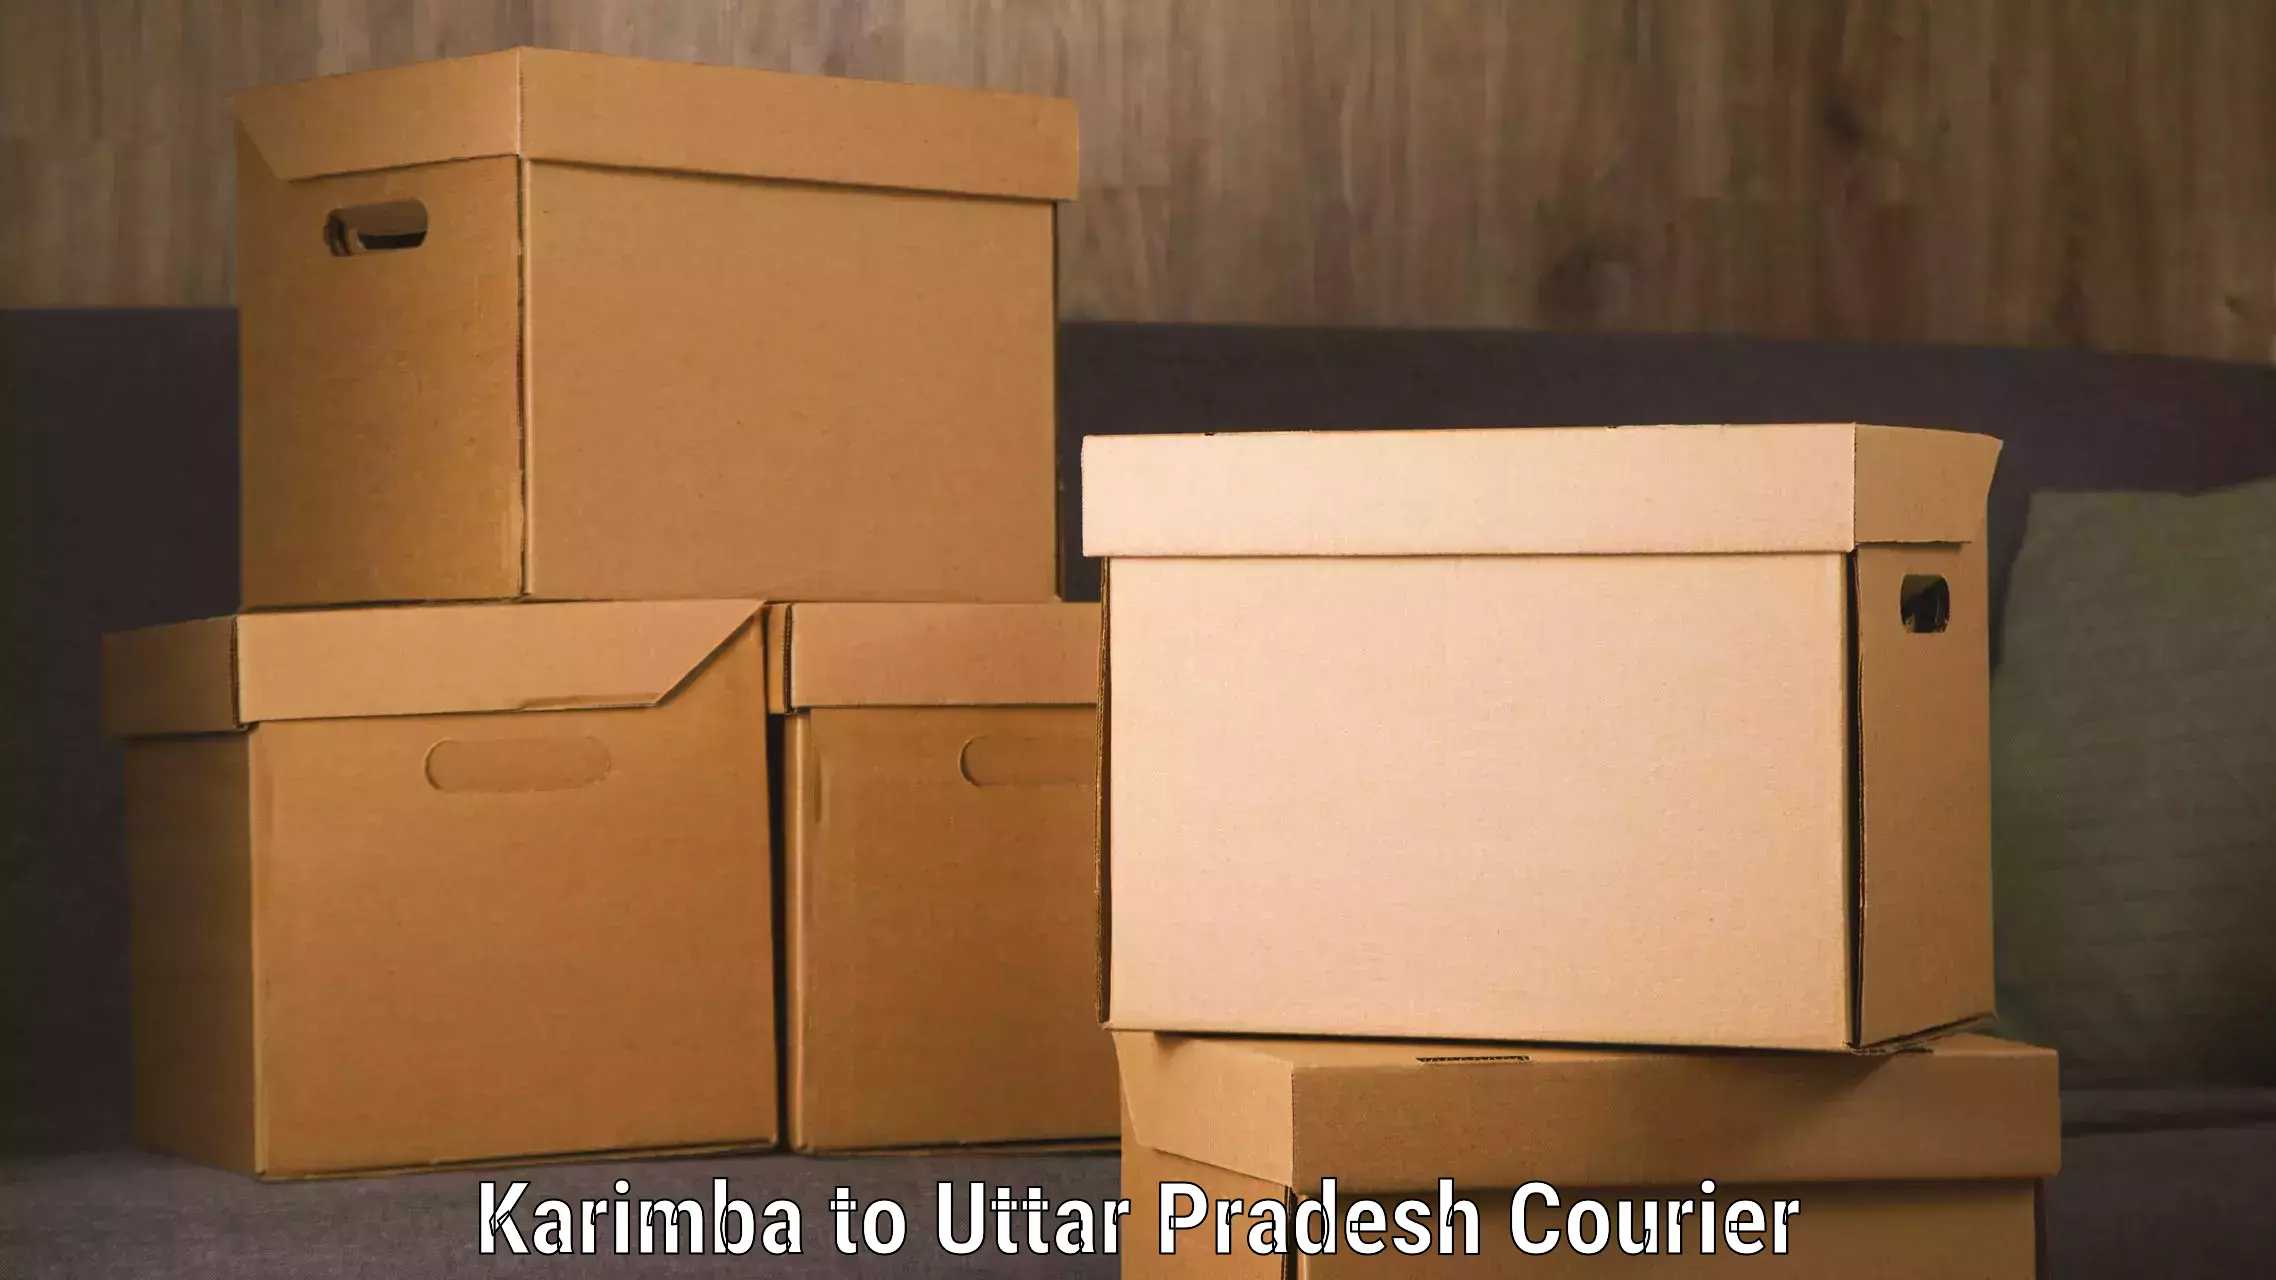 State-of-the-art courier technology Karimba to Varanasi